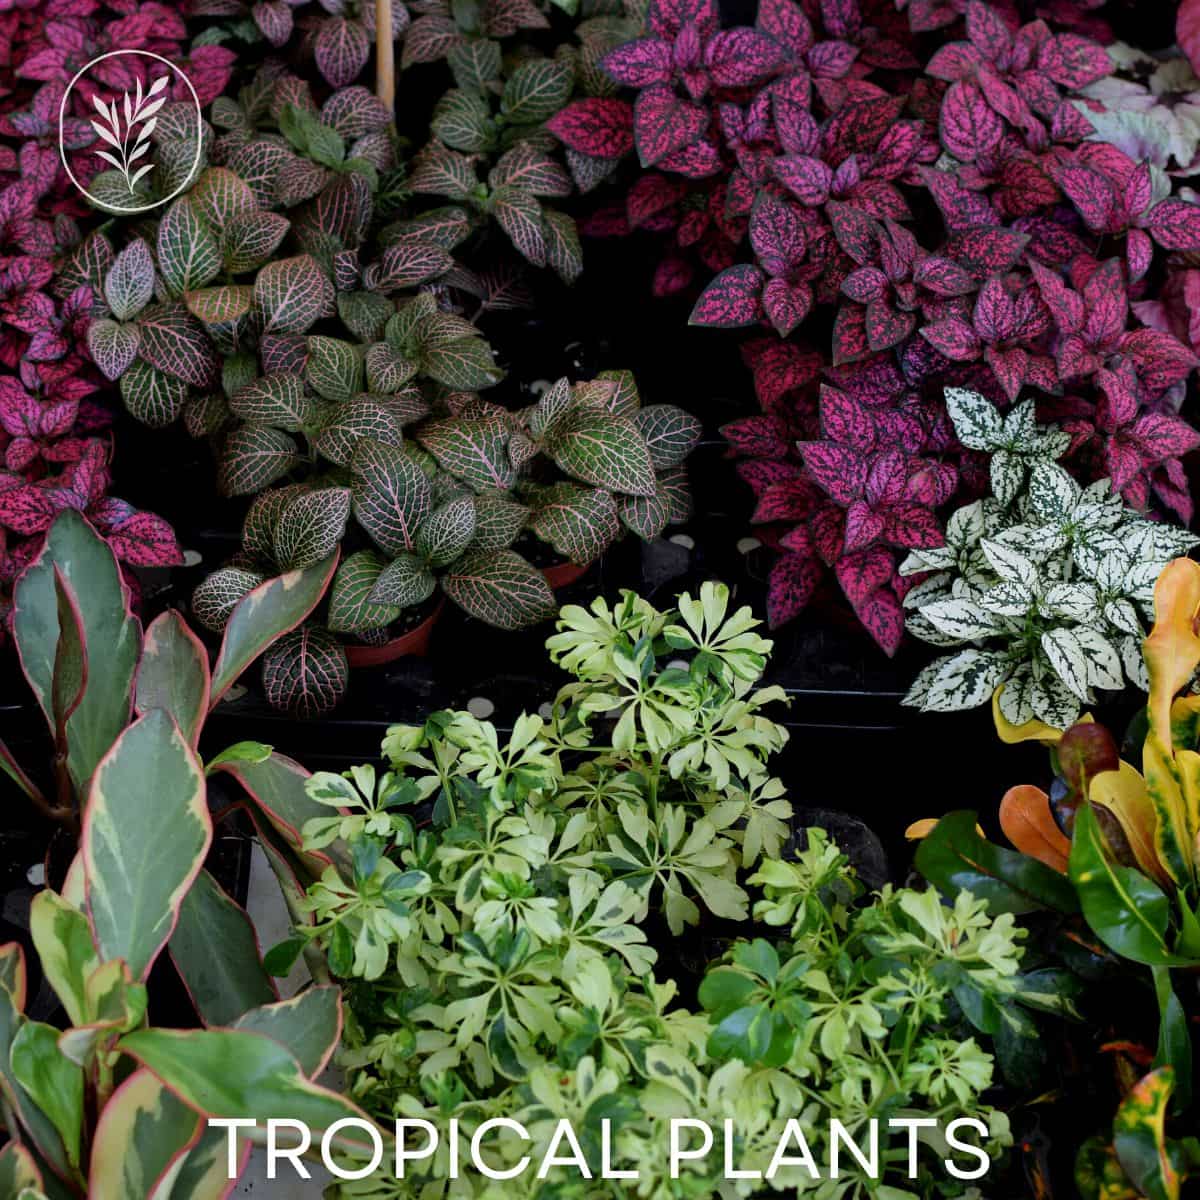 Tropical plants via @home4theharvest